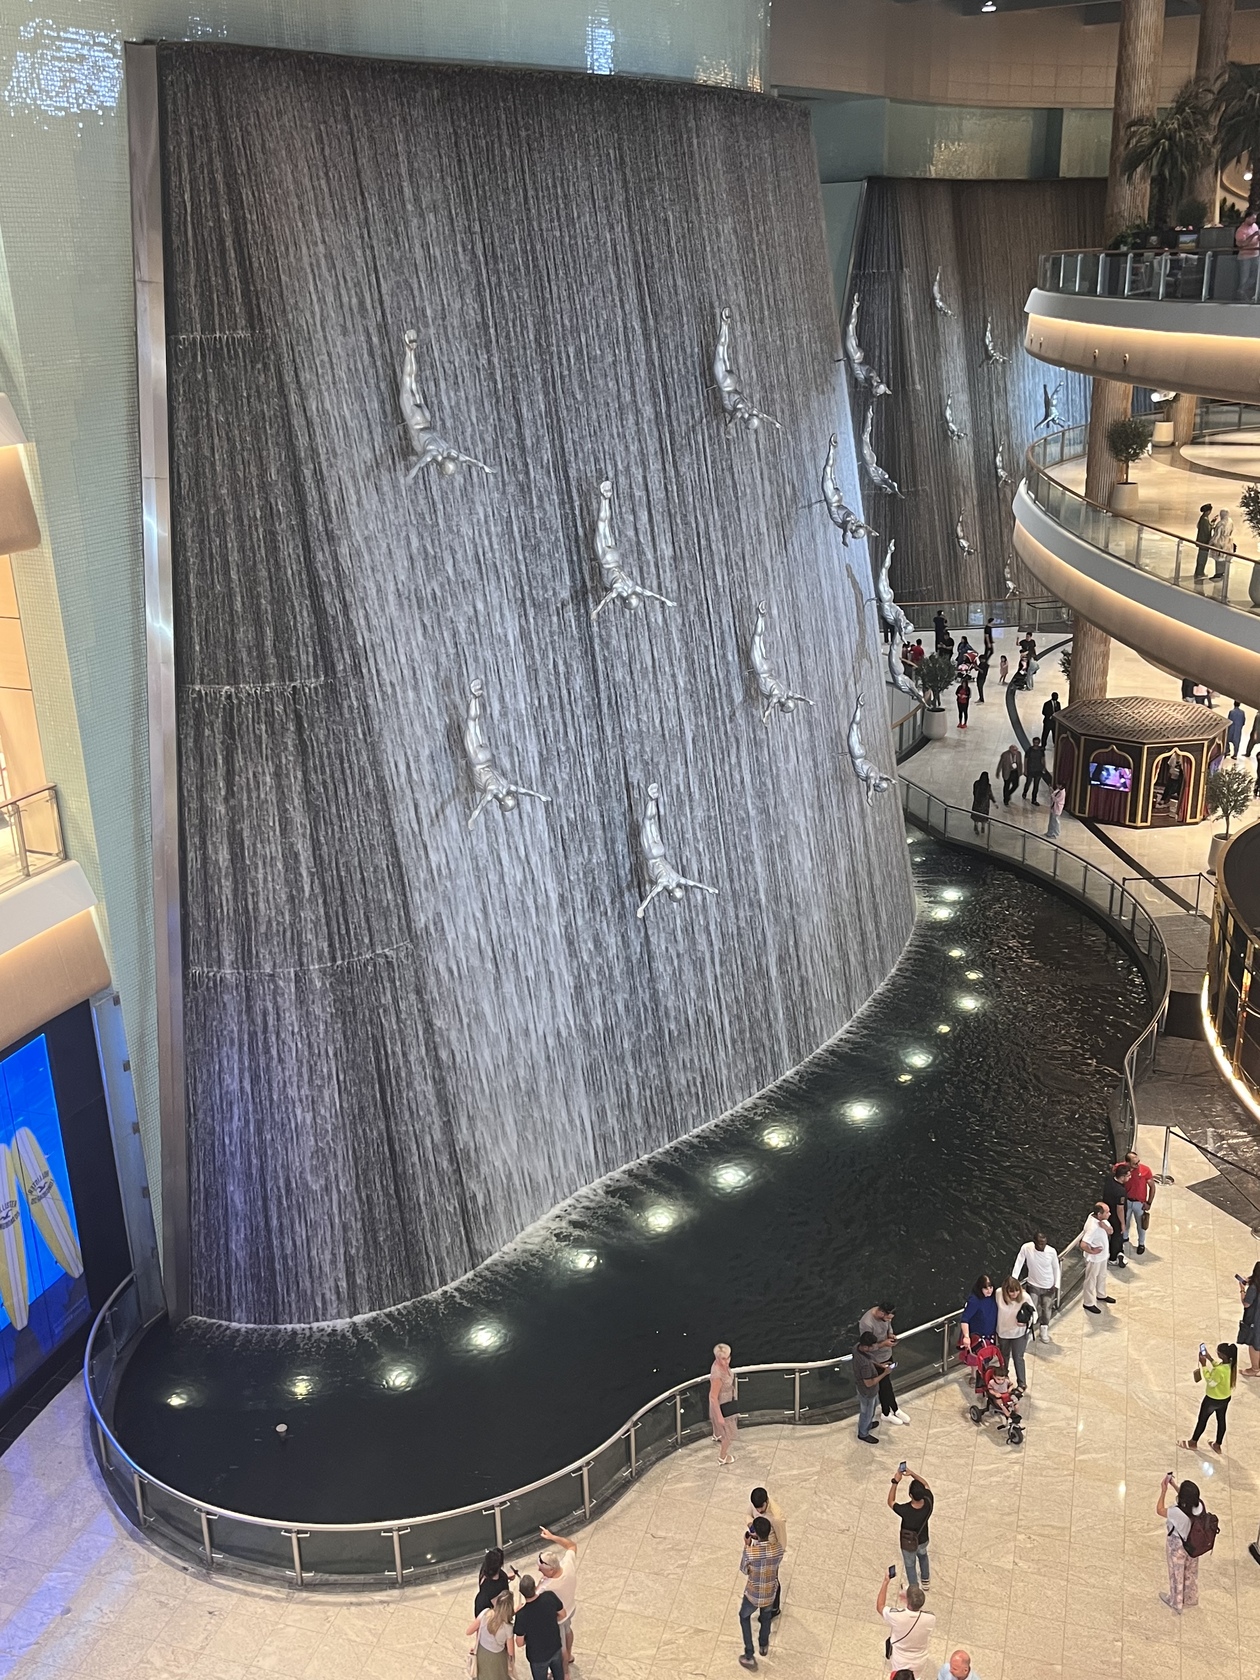 Dubai mall